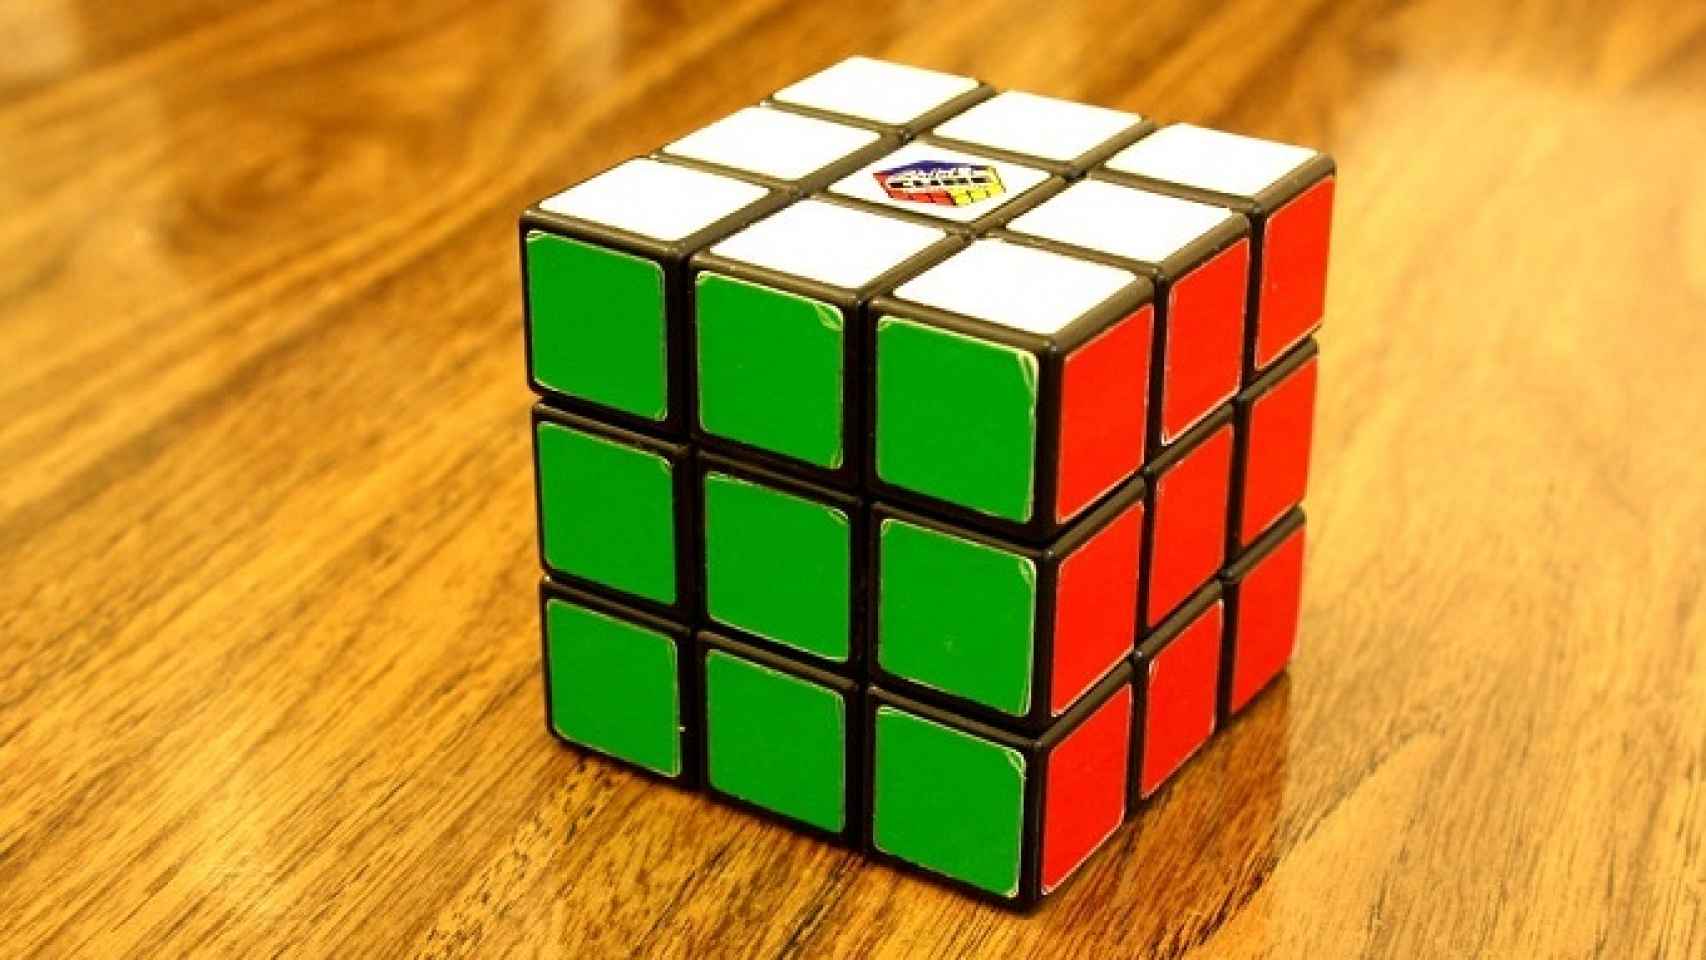 cubo-rubik-solucion